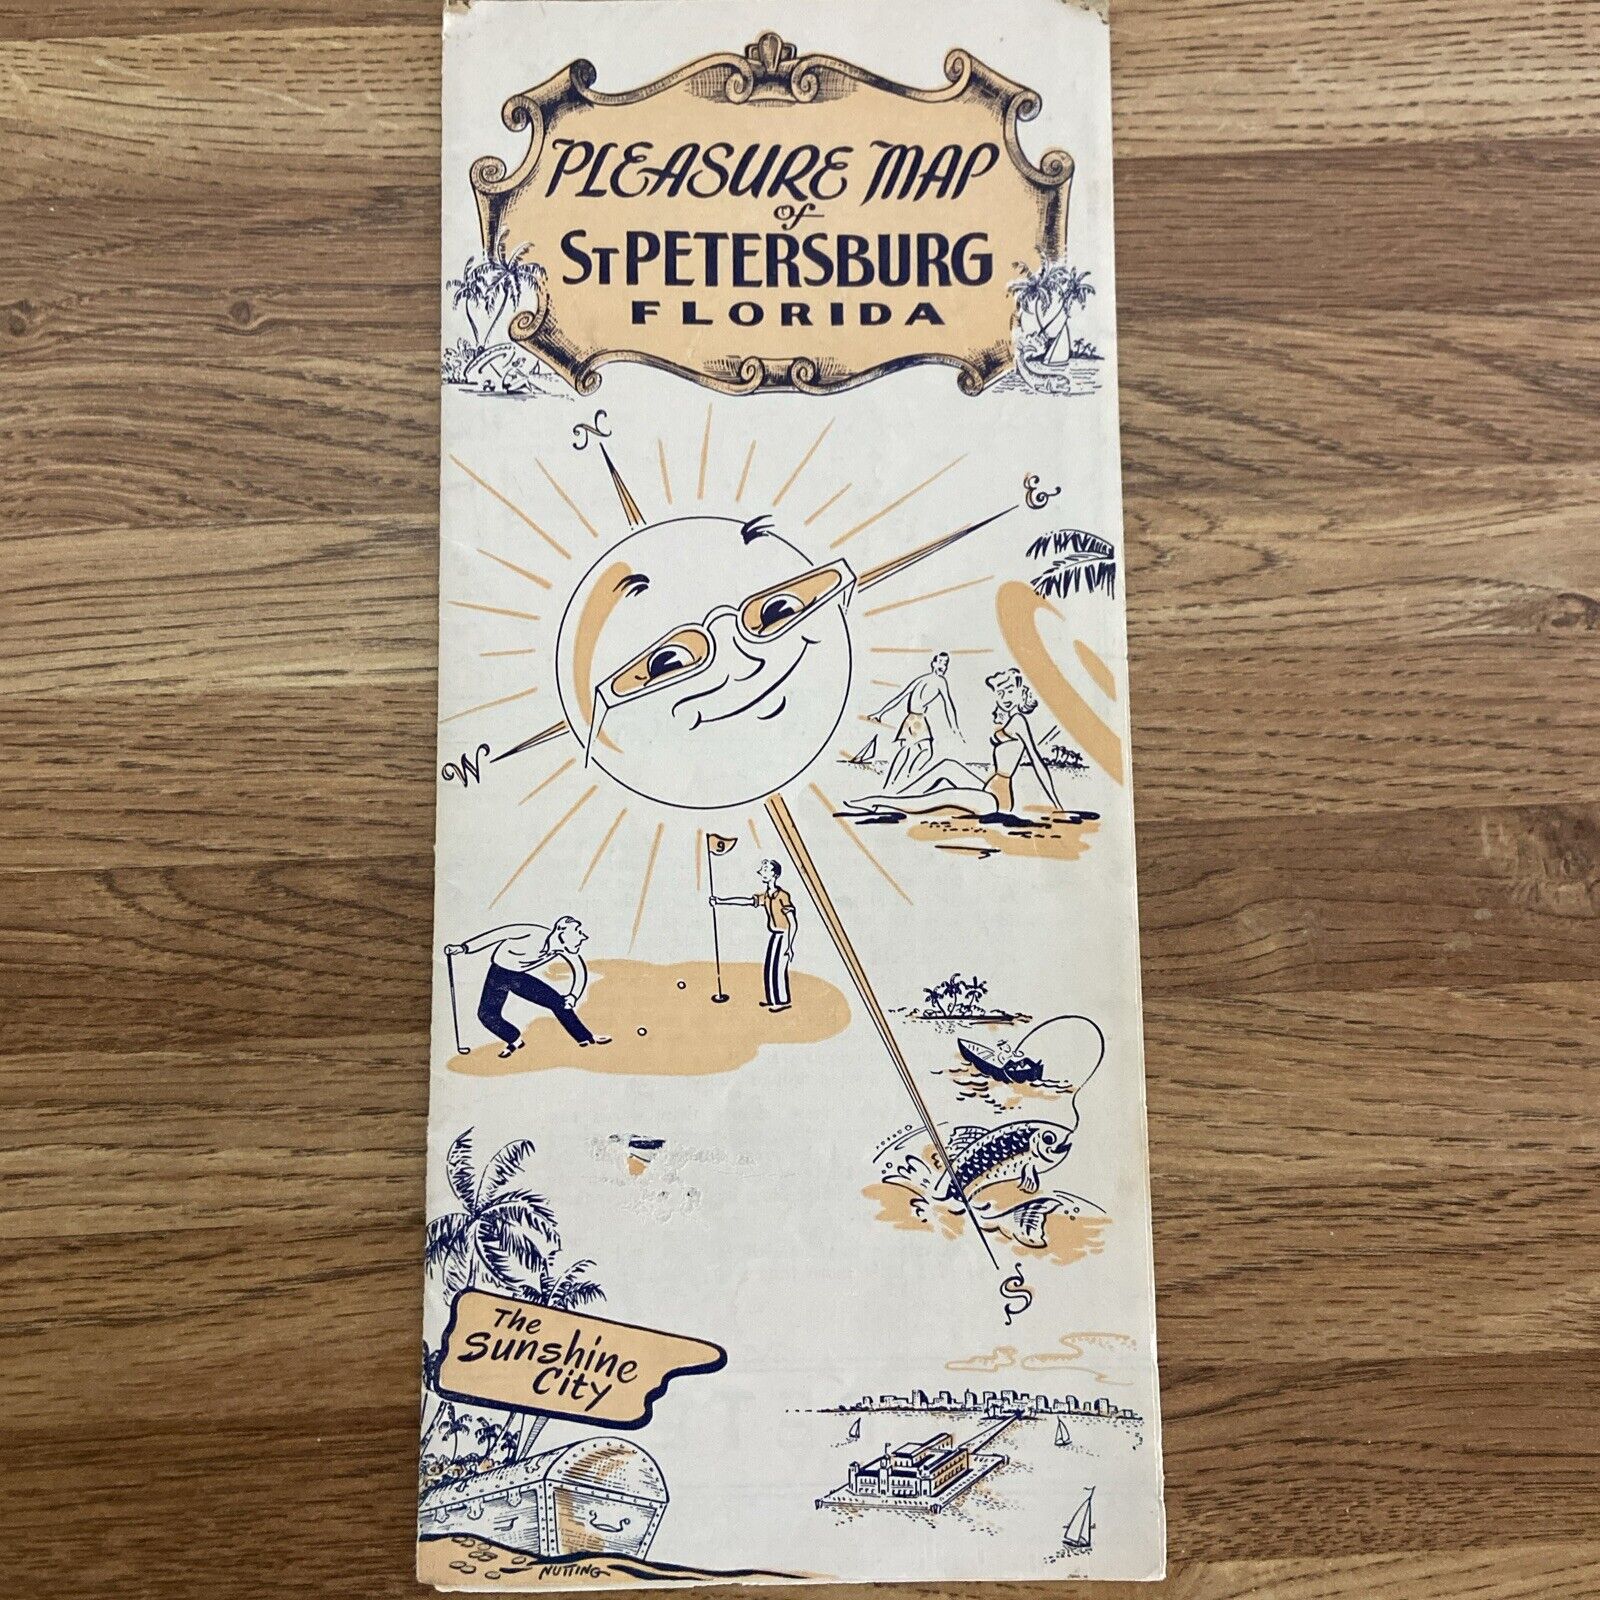 St Petersburg Florida Vintage Pleasure Map Brochure 